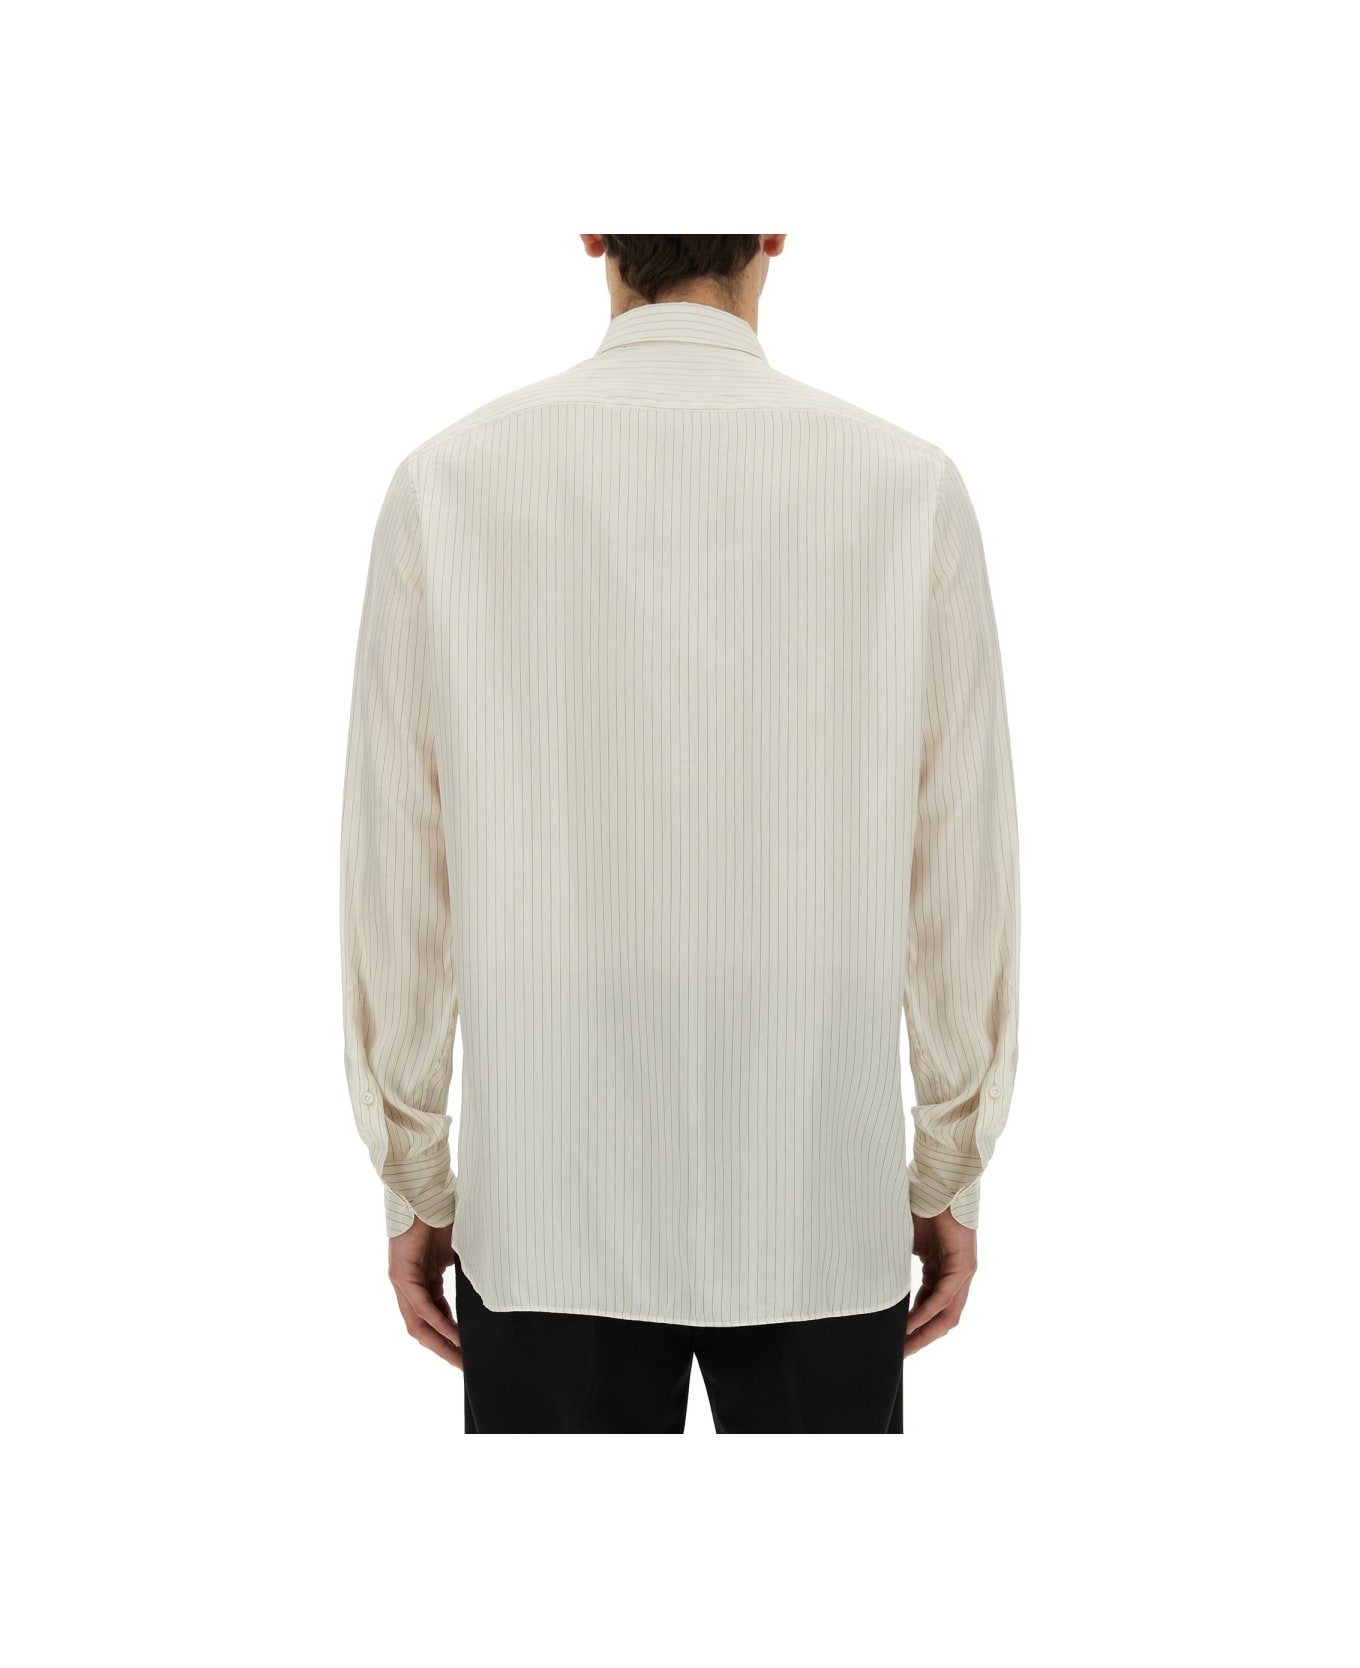 Lardini Striped Shirt - Bianco nero